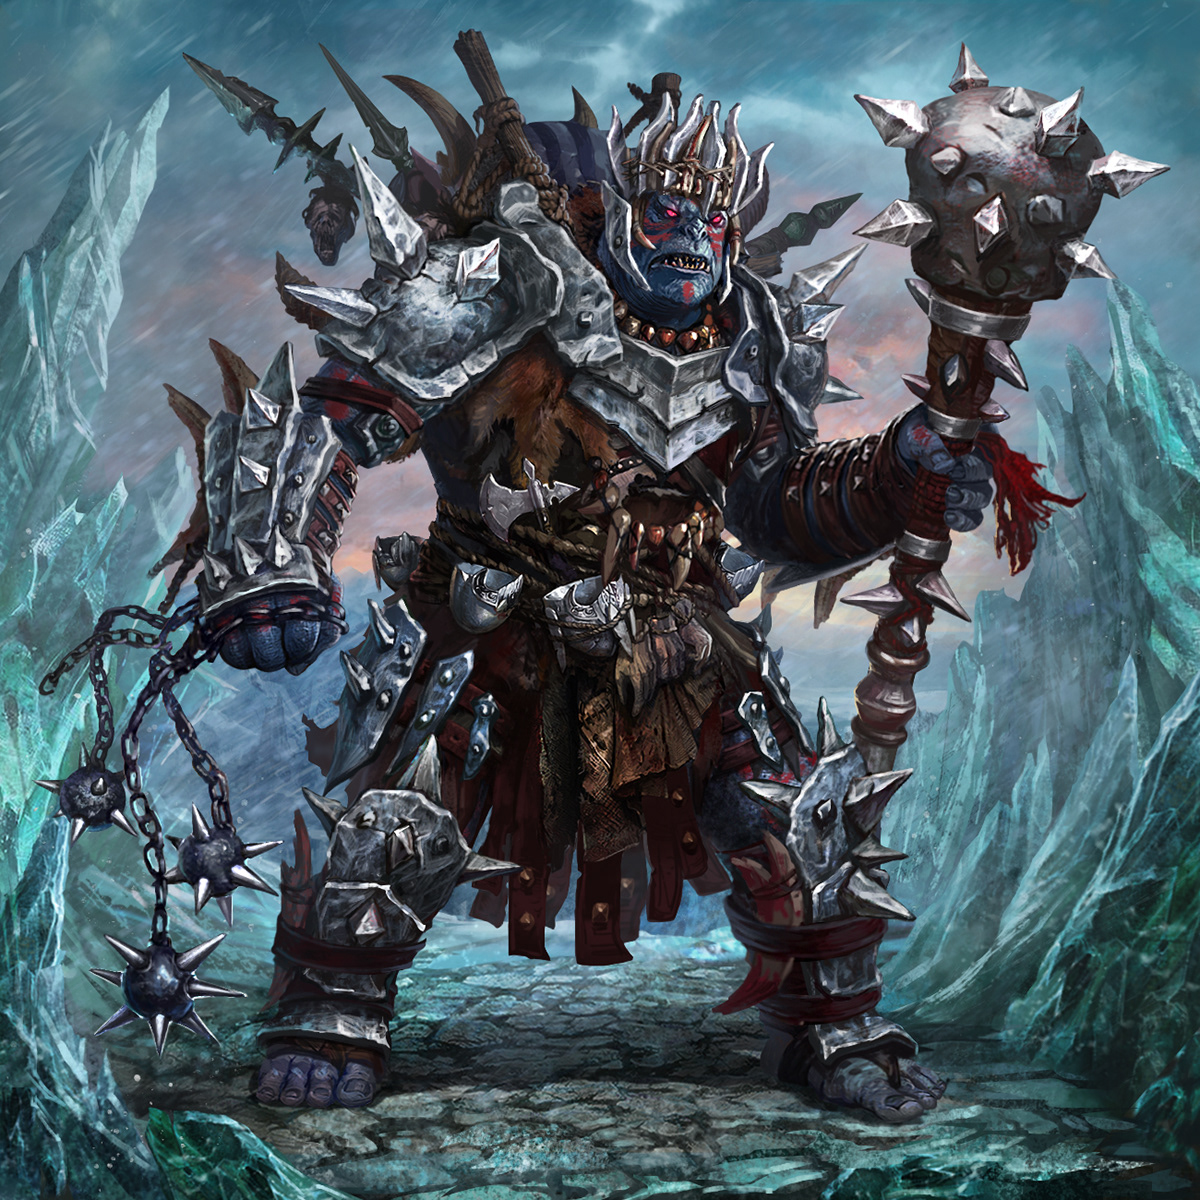 Digital Art  ILLUSTRATION  Character design  concept Game Art heavens warrior Barbarian Rogue Noai